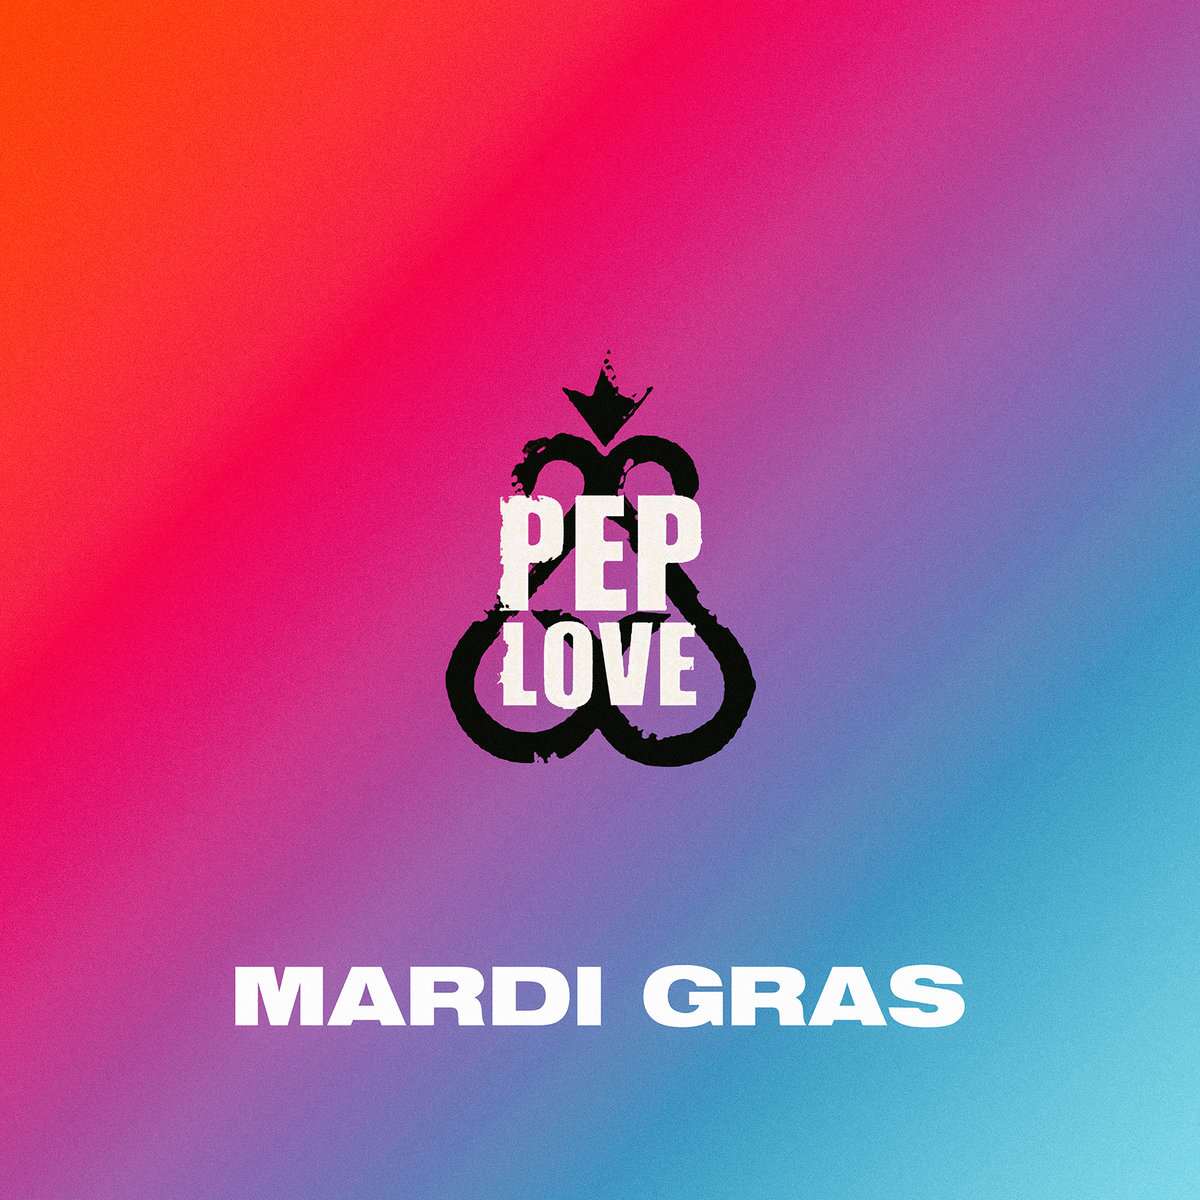 Pep_love_mardi_gras